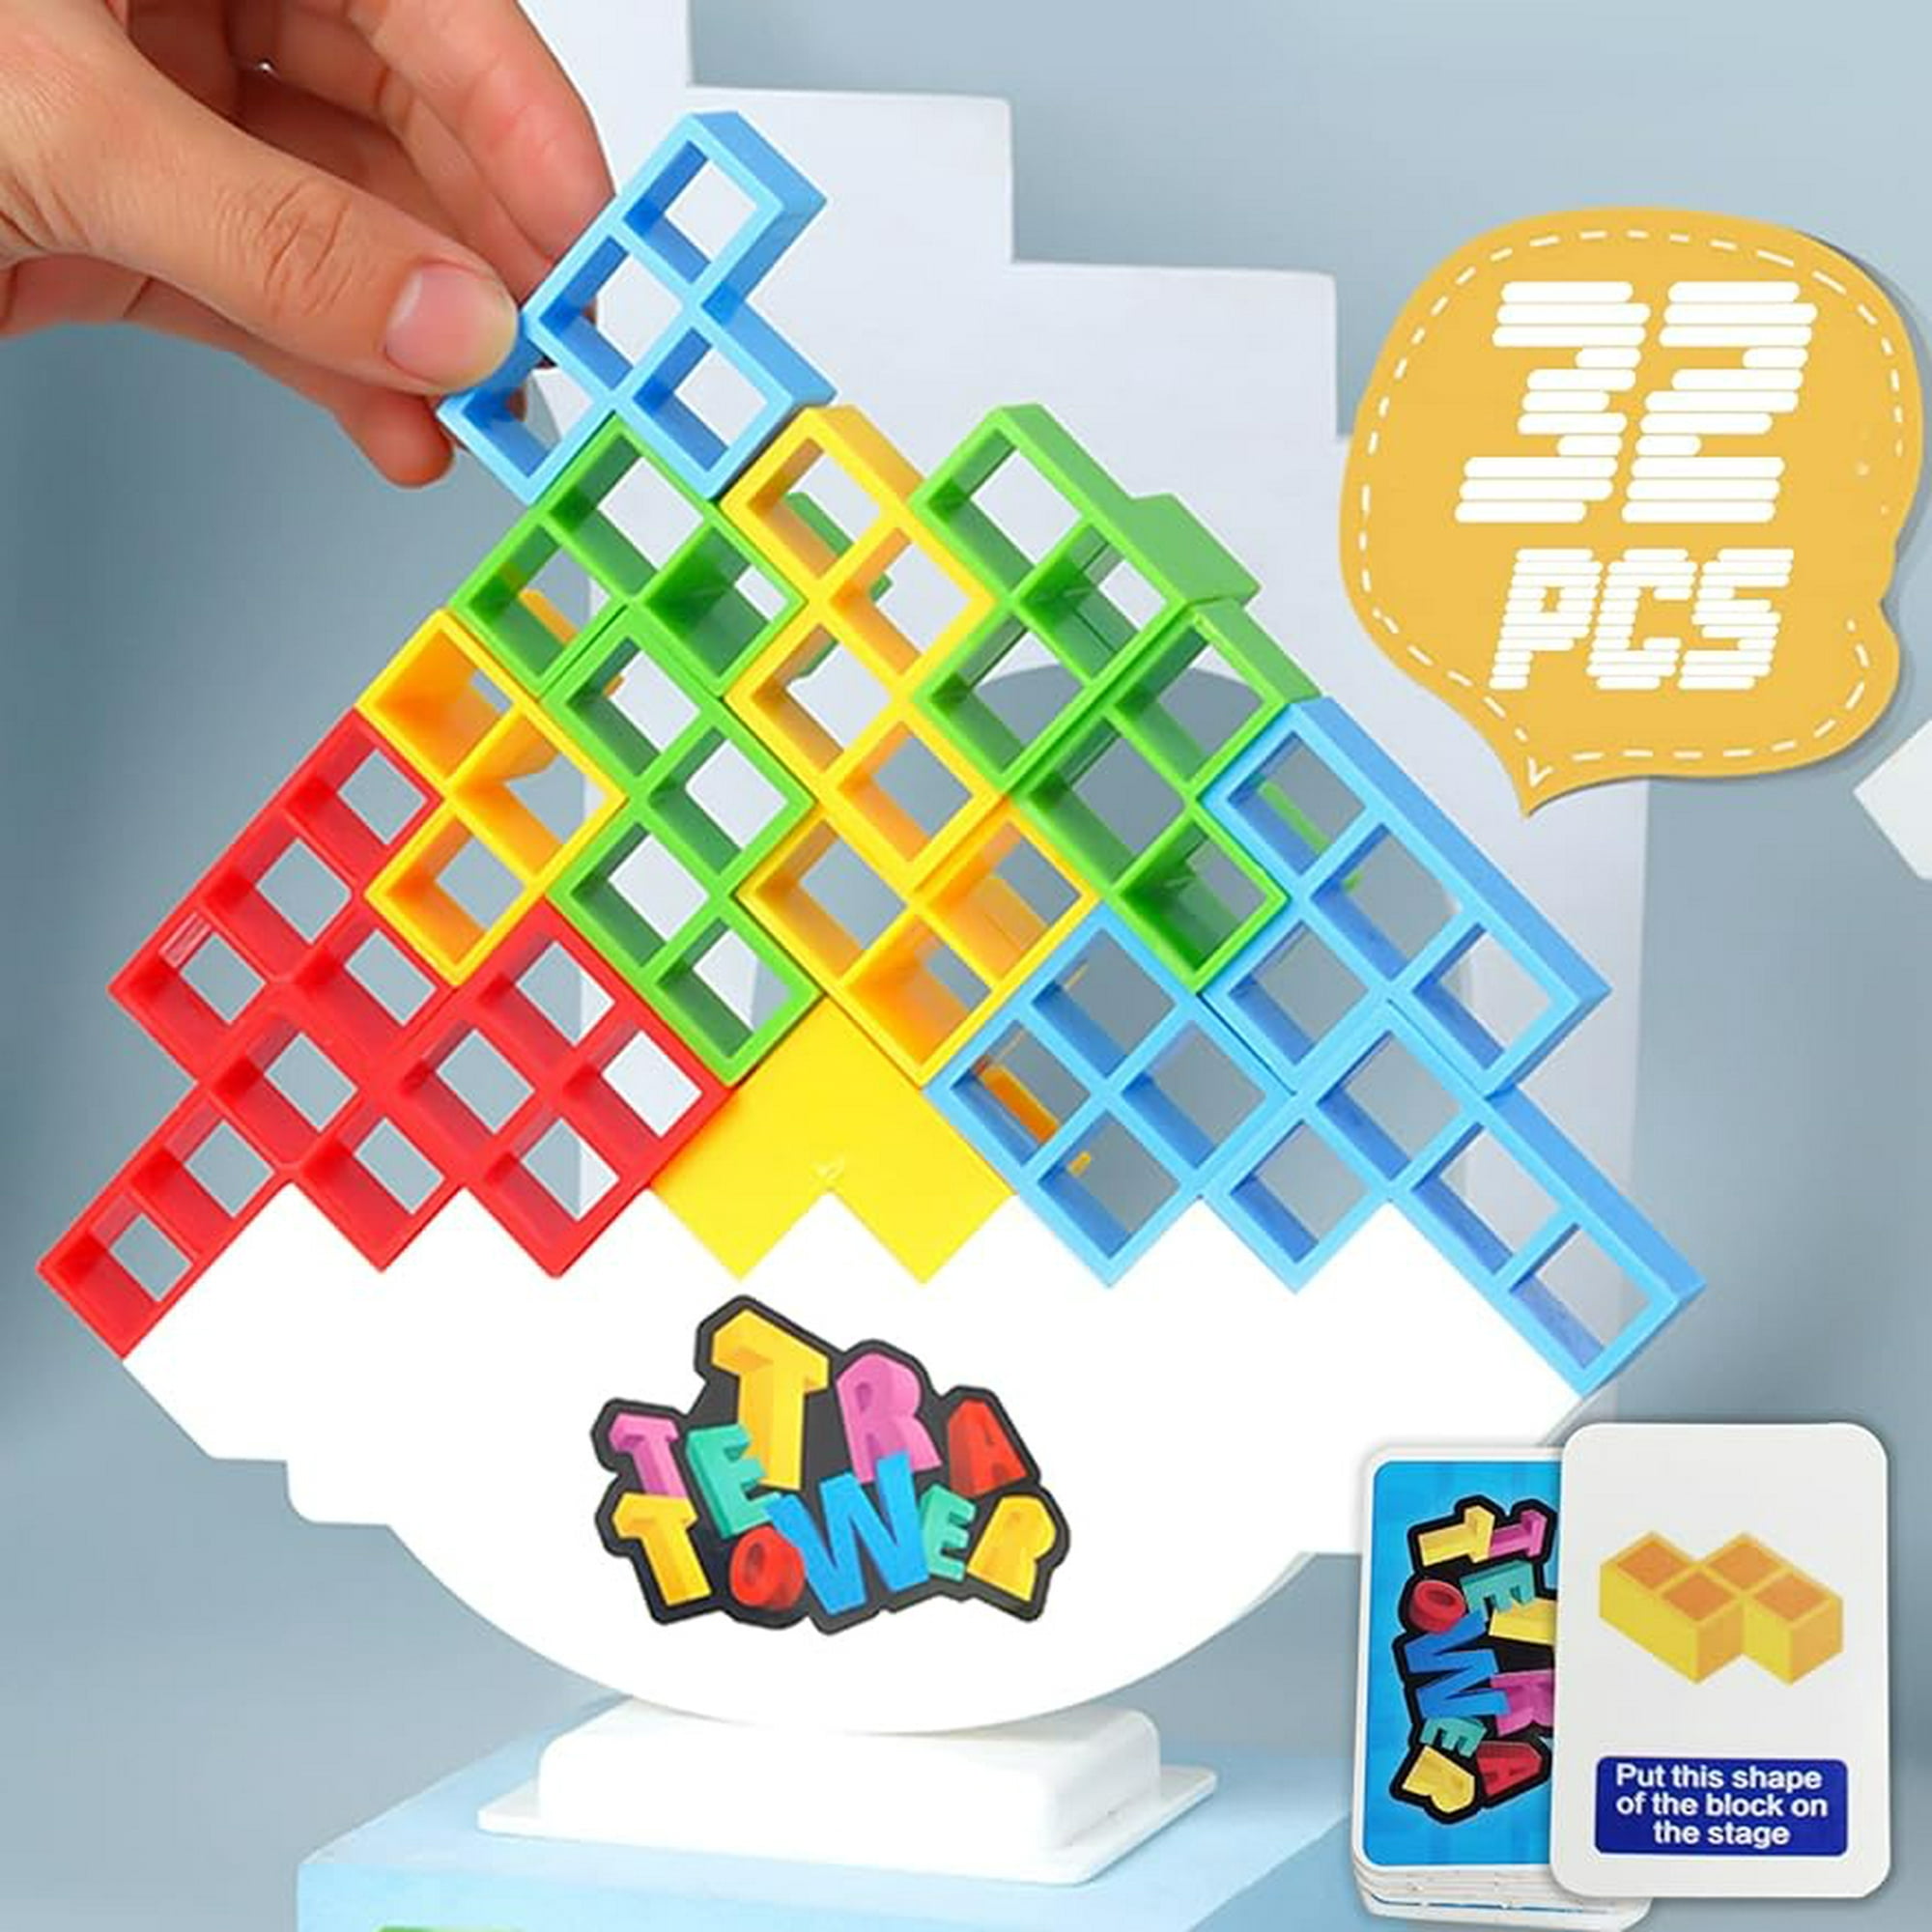 Tetris de equilibrio 32 piezas Tetra Tower